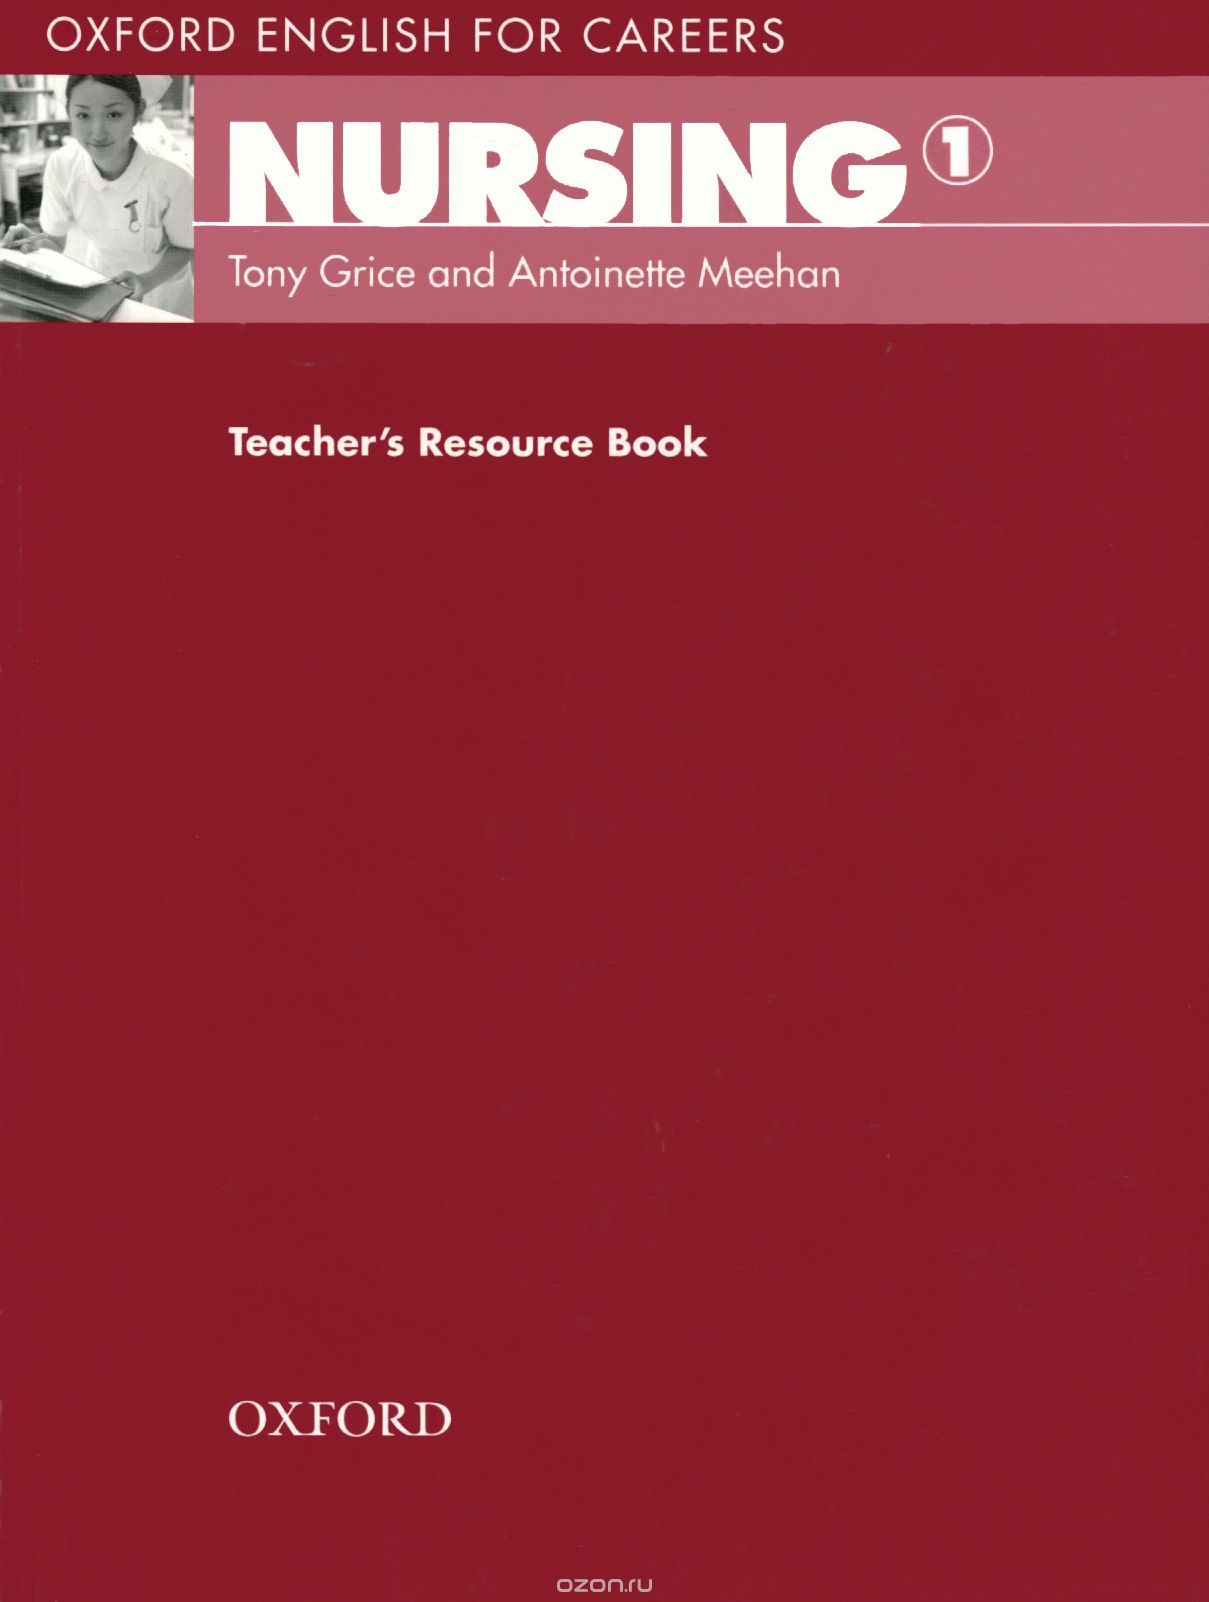 Скачать книгу "Oxford English for Careers: Nursing 1: Teacher's Resource Book"